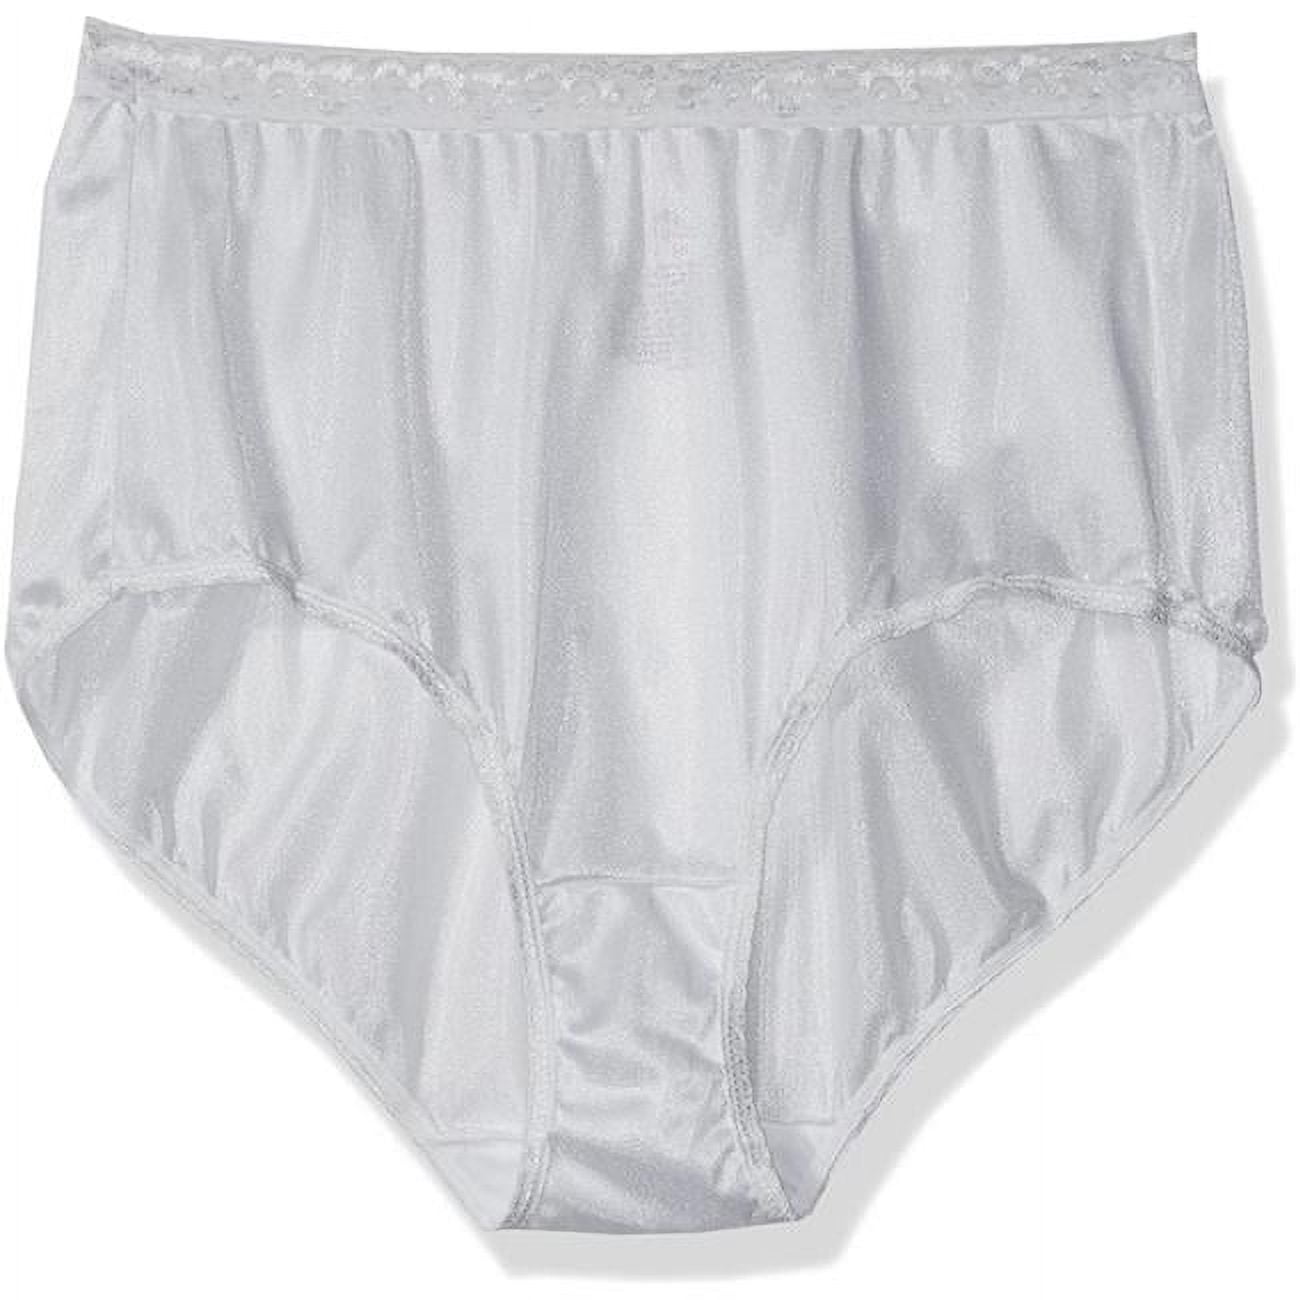 4 PAIRS WOMENS Underwear Plus Size 9 Just My Size JMS Nylon Hi Cut Briefs  $7.95 - PicClick